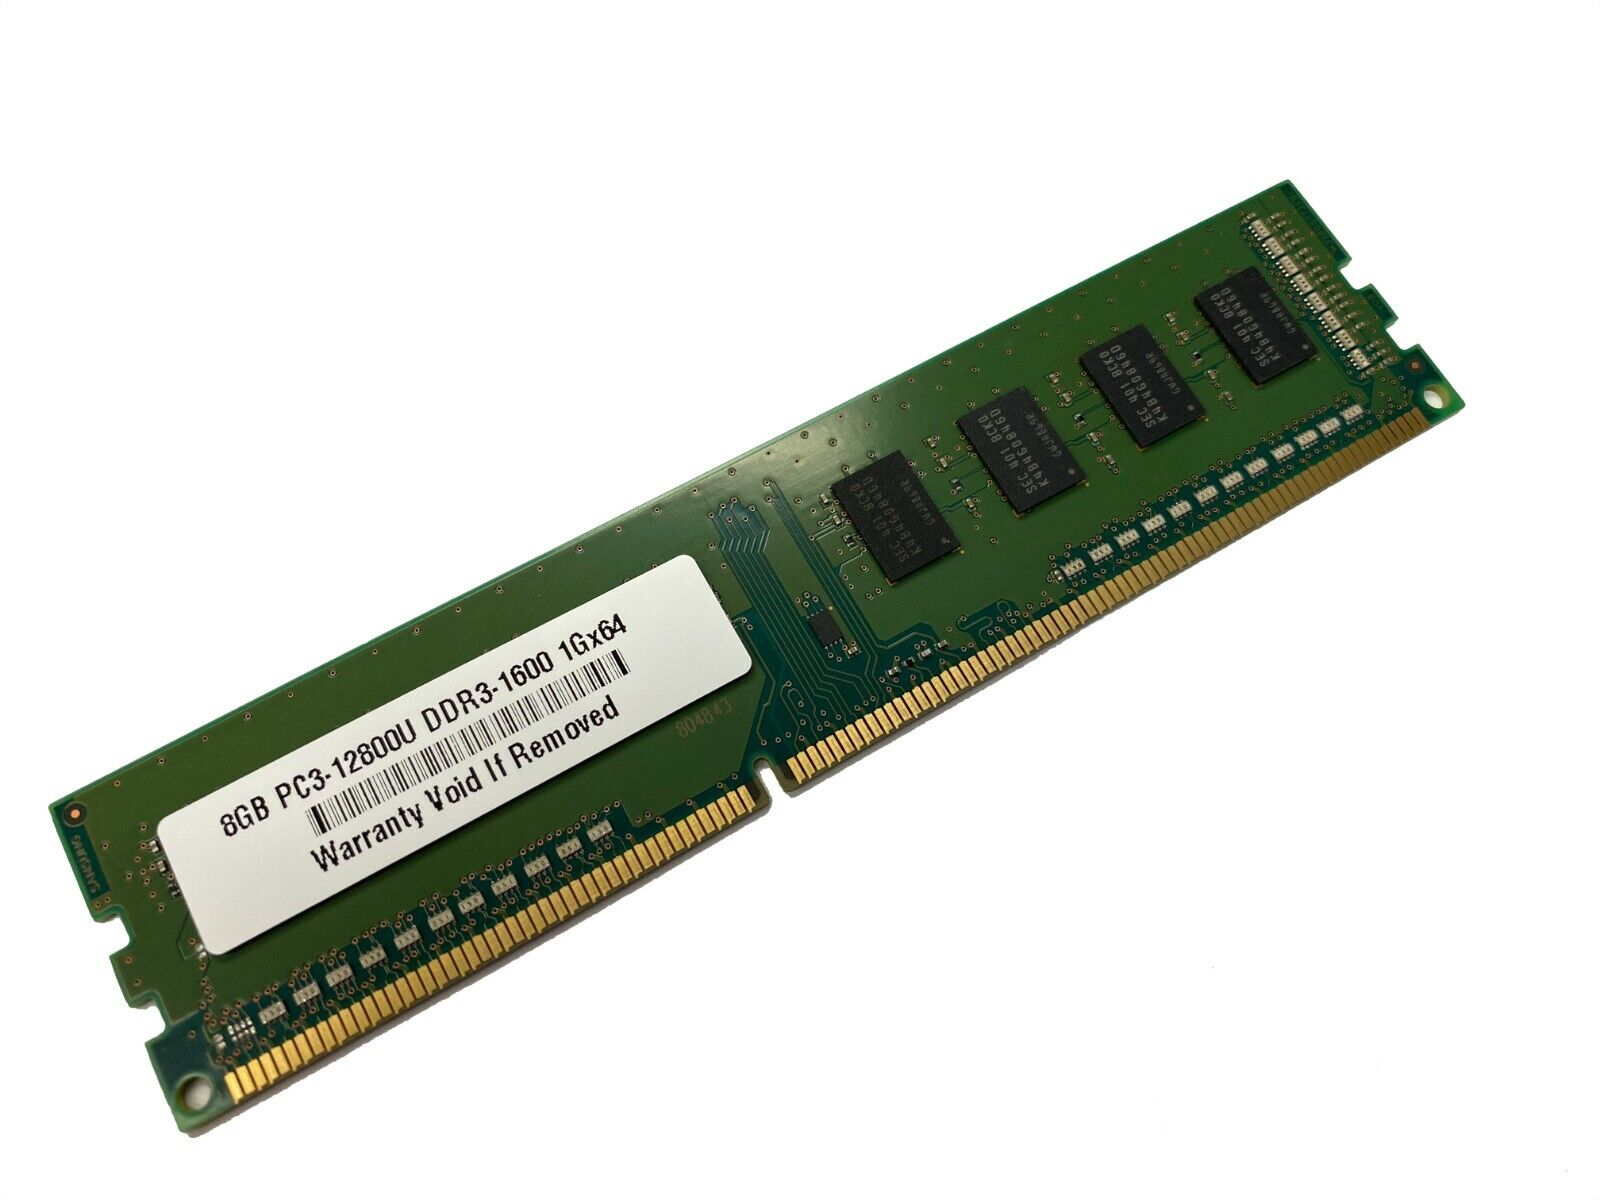 8GB Memory for ASUS Z87-Pro (V Edition), Z87-Pro, Z87-WS DDR3 PC3-12800U RAM